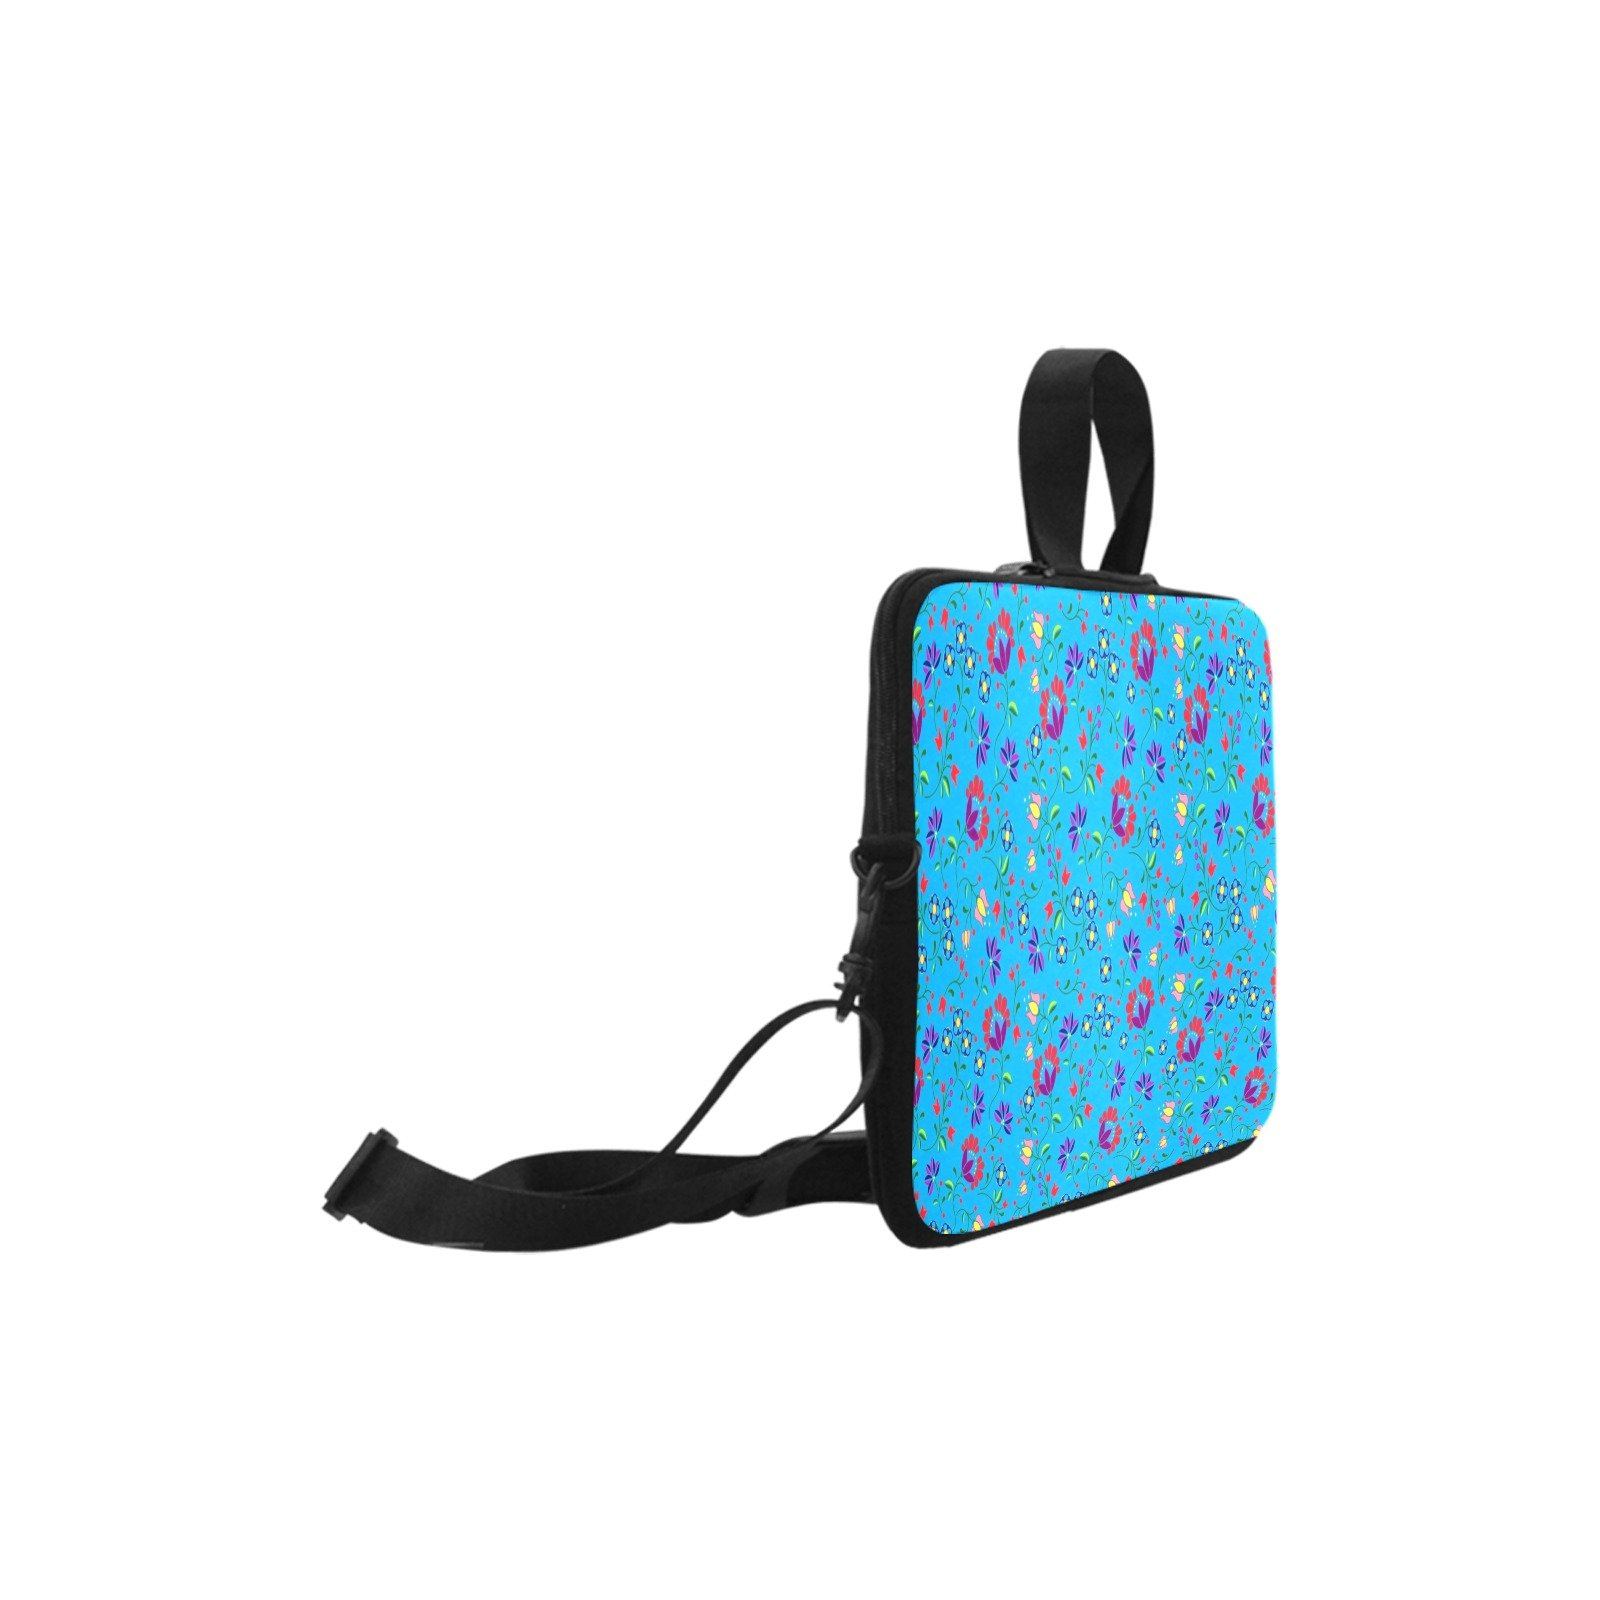 Fleur Indigine Ciel Laptop Handbags 14" bag e-joyer 